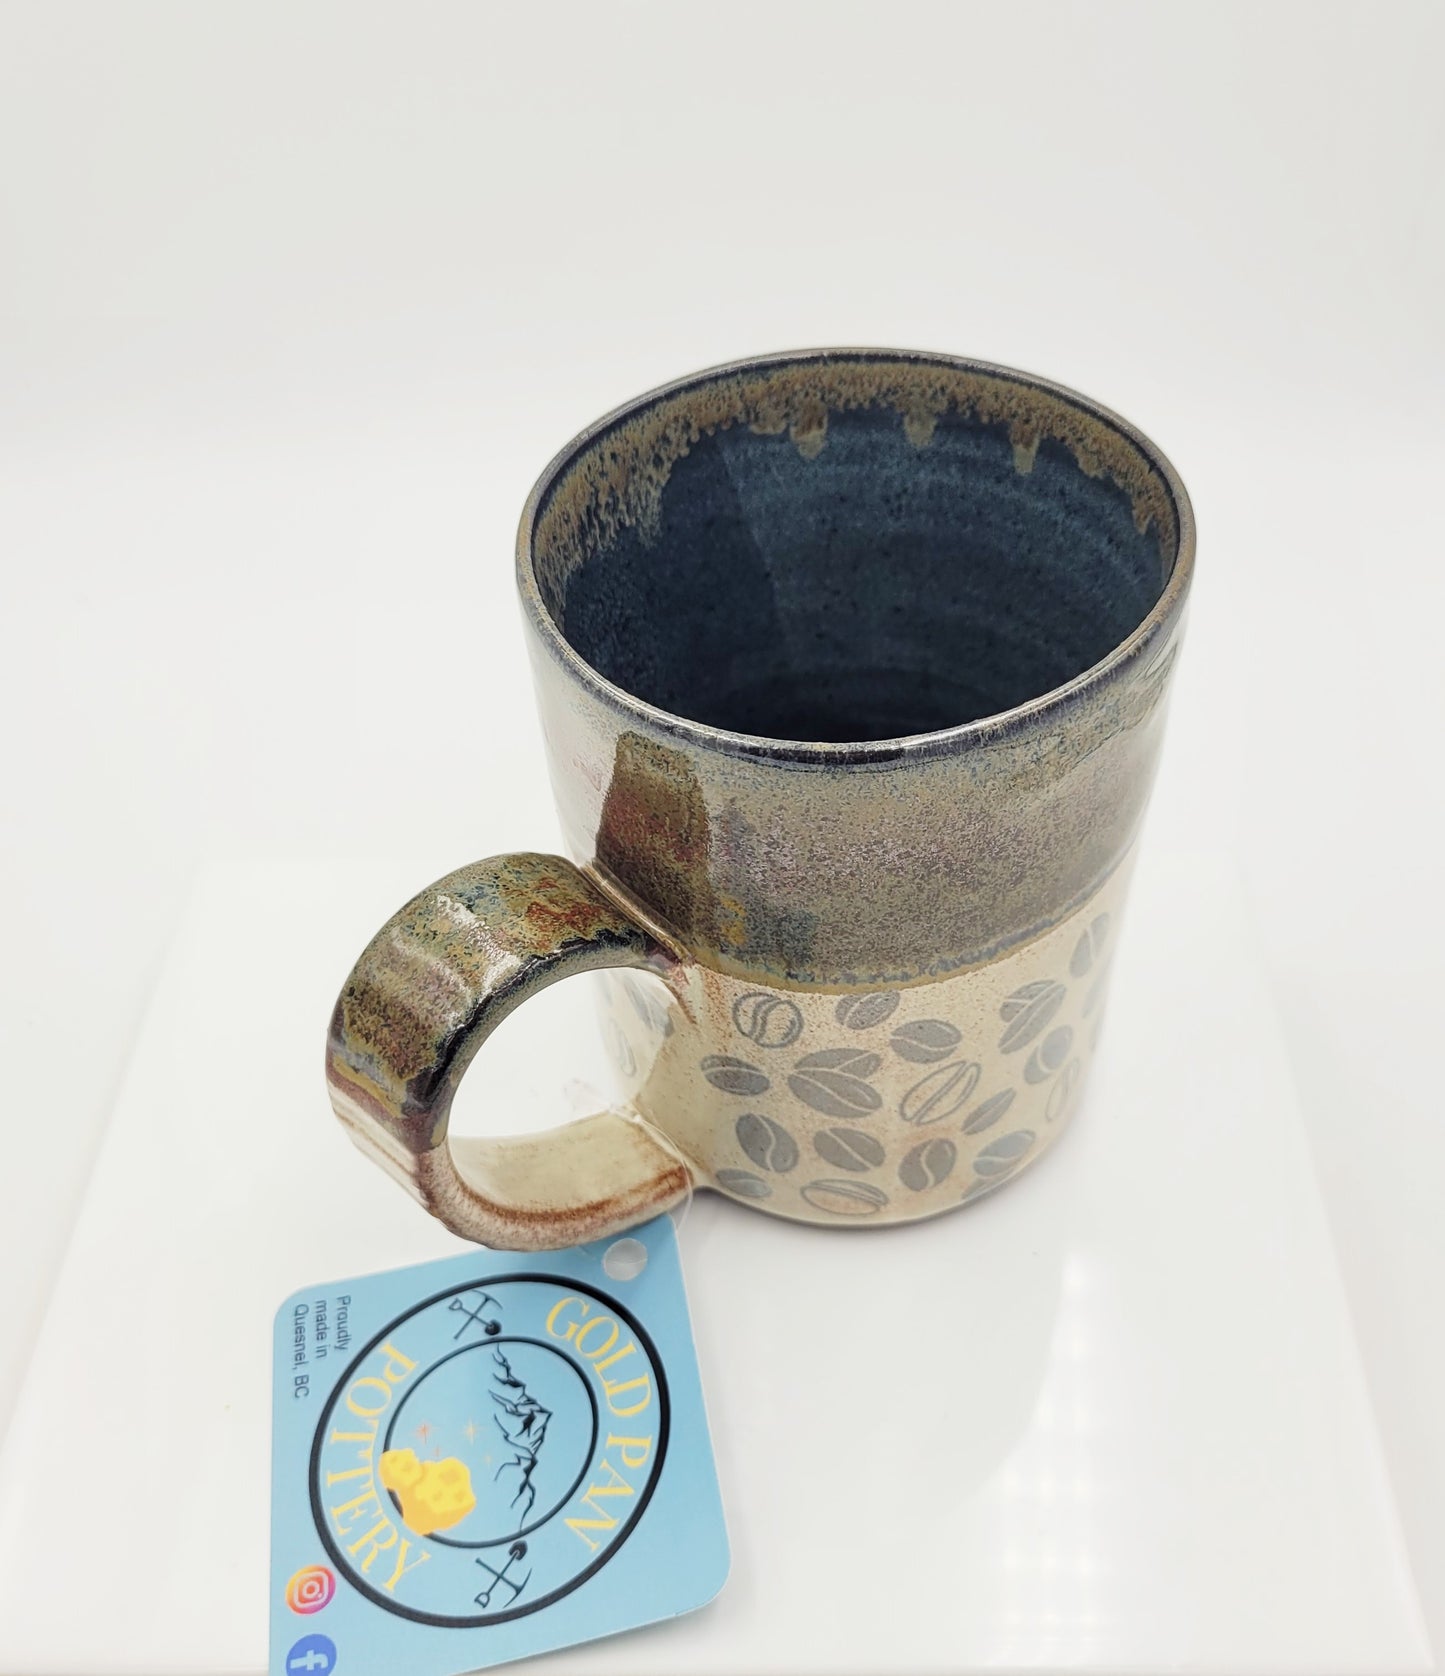 Handmade Pottery Mug, Coffee bean